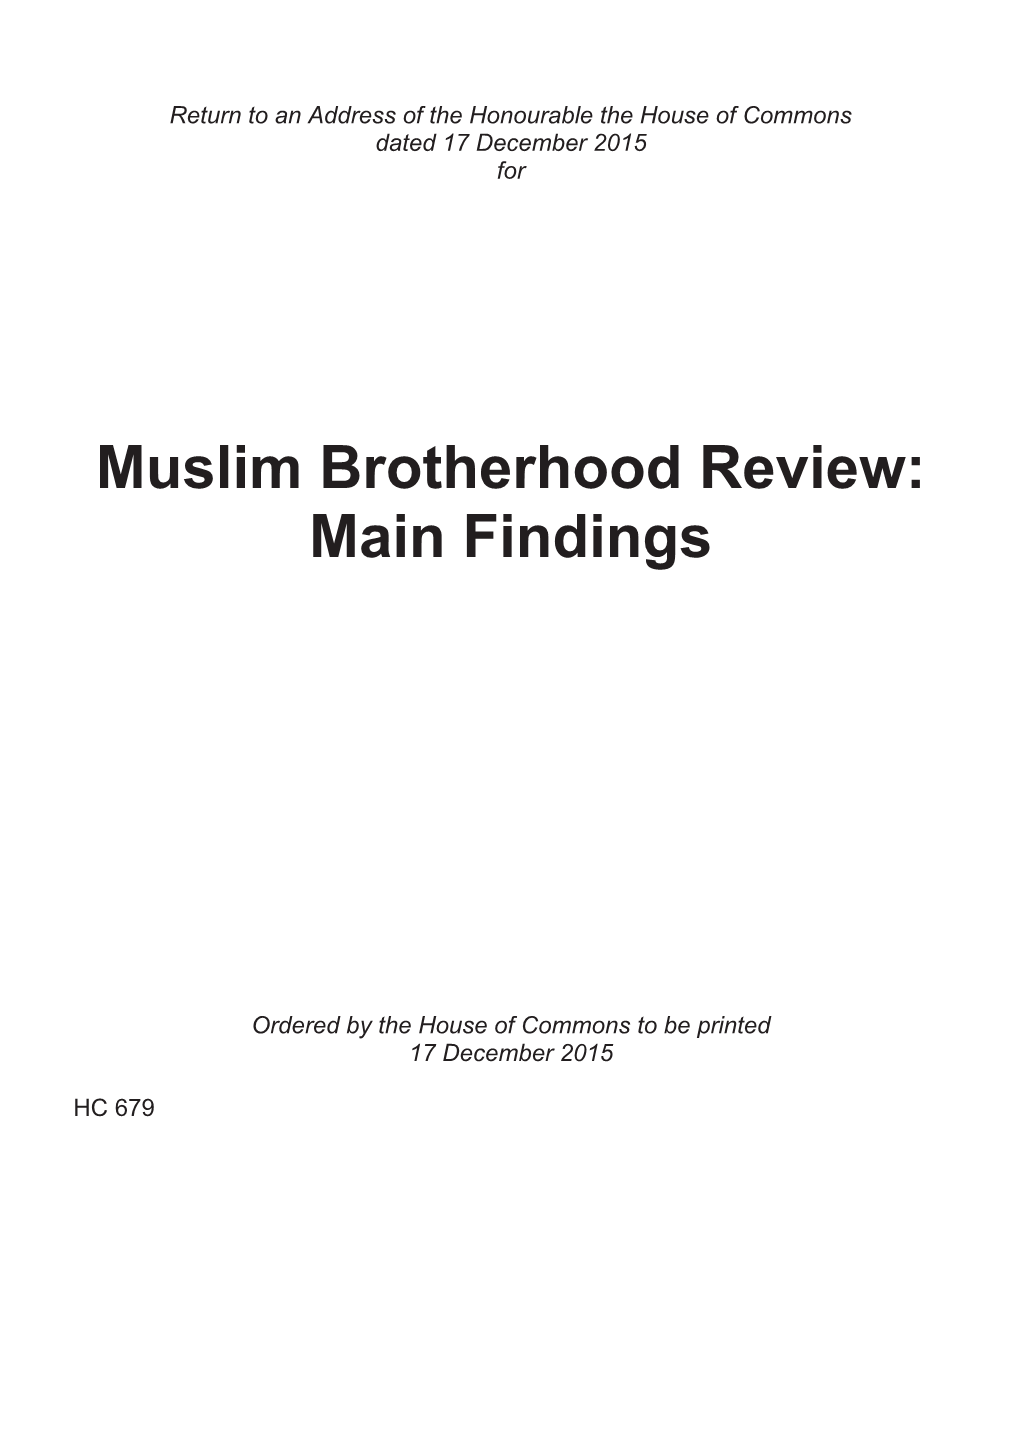 Muslim Brotherhood Review: Main Findings